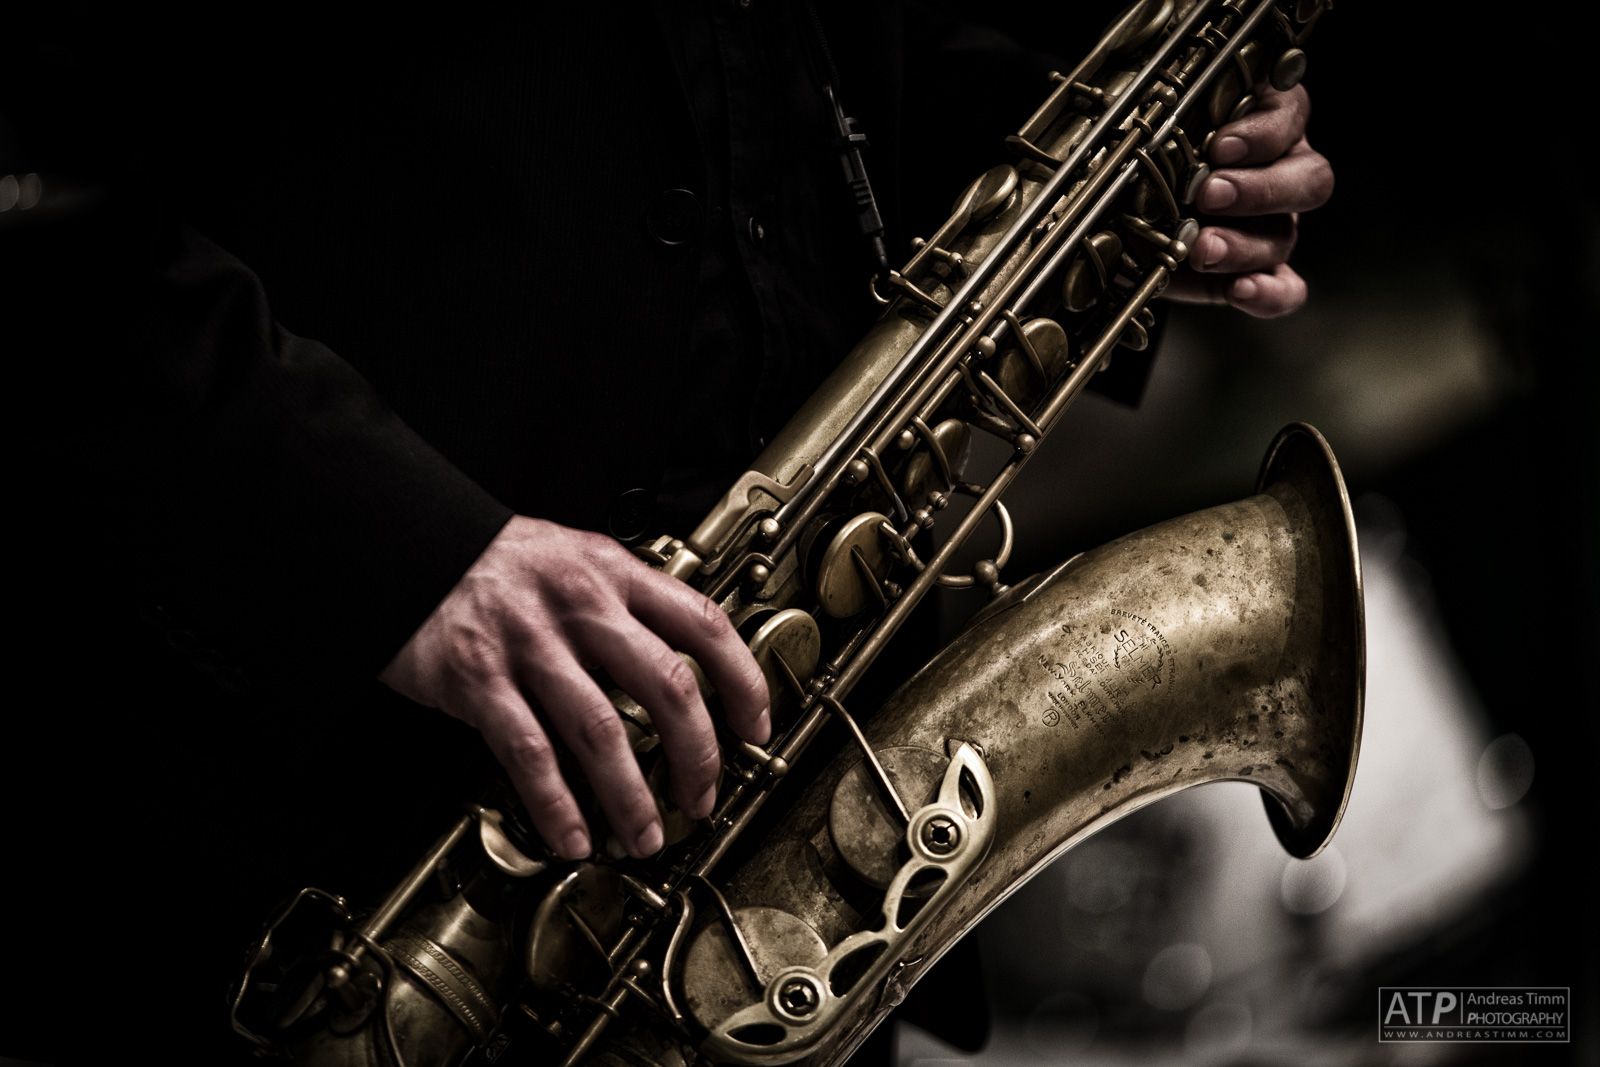 Jazz Saxophone Andreas Timm Photography